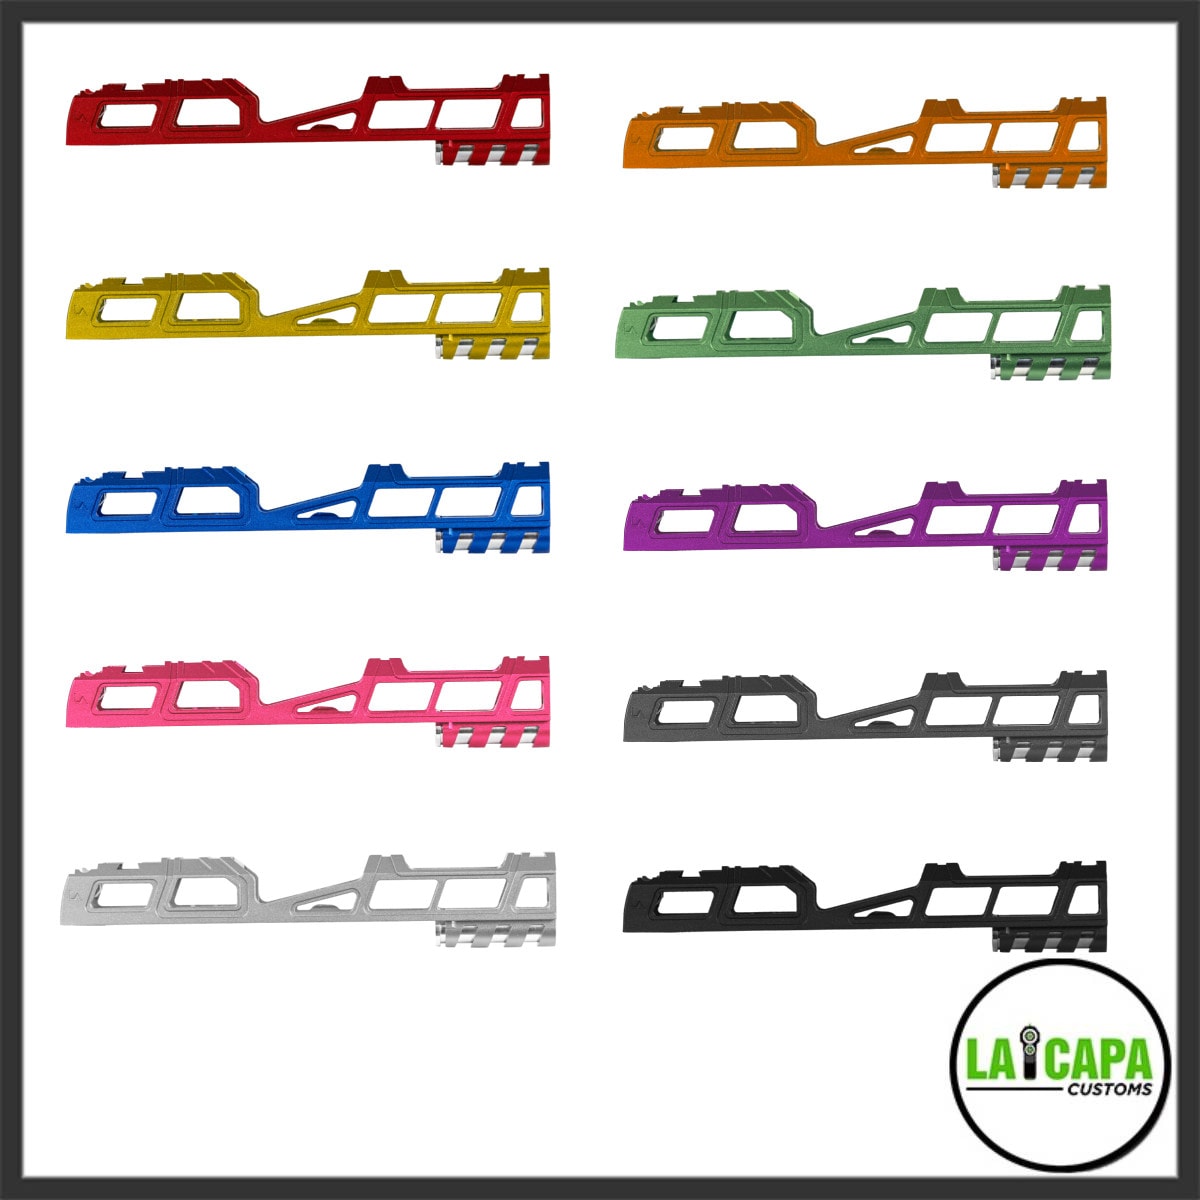 LA Capa Customs 5.1 “Hyper” Aluminum Slide - Purple